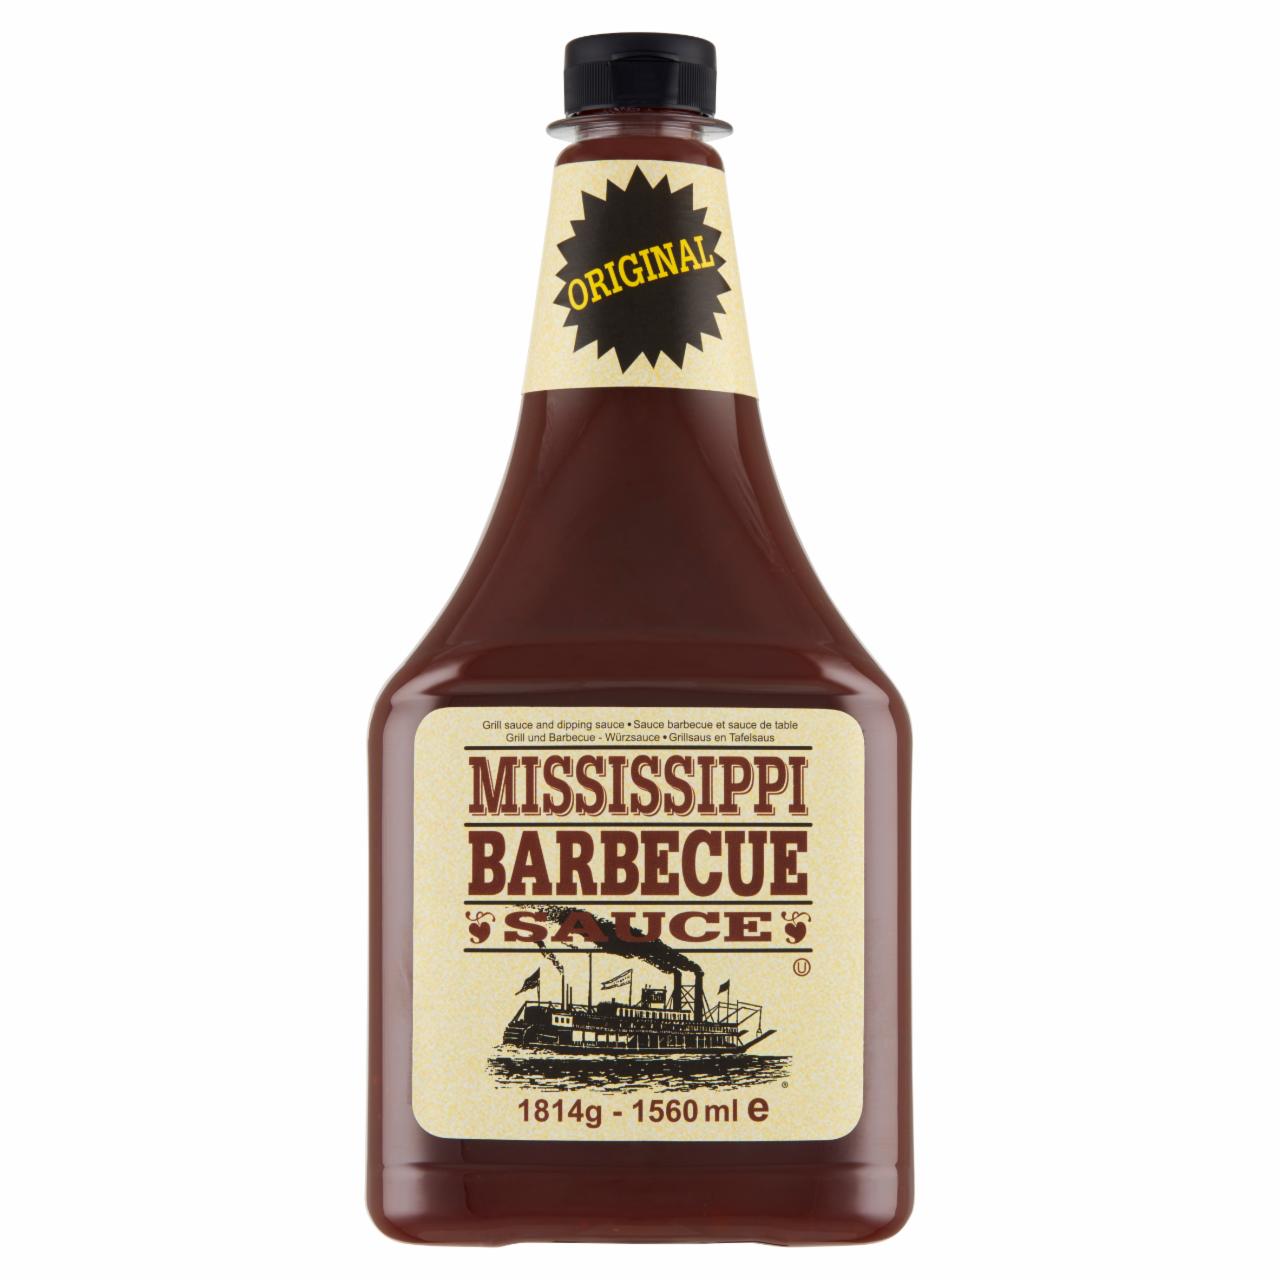 Zdjęcia - Mississippi Sos barbecue 1814 g